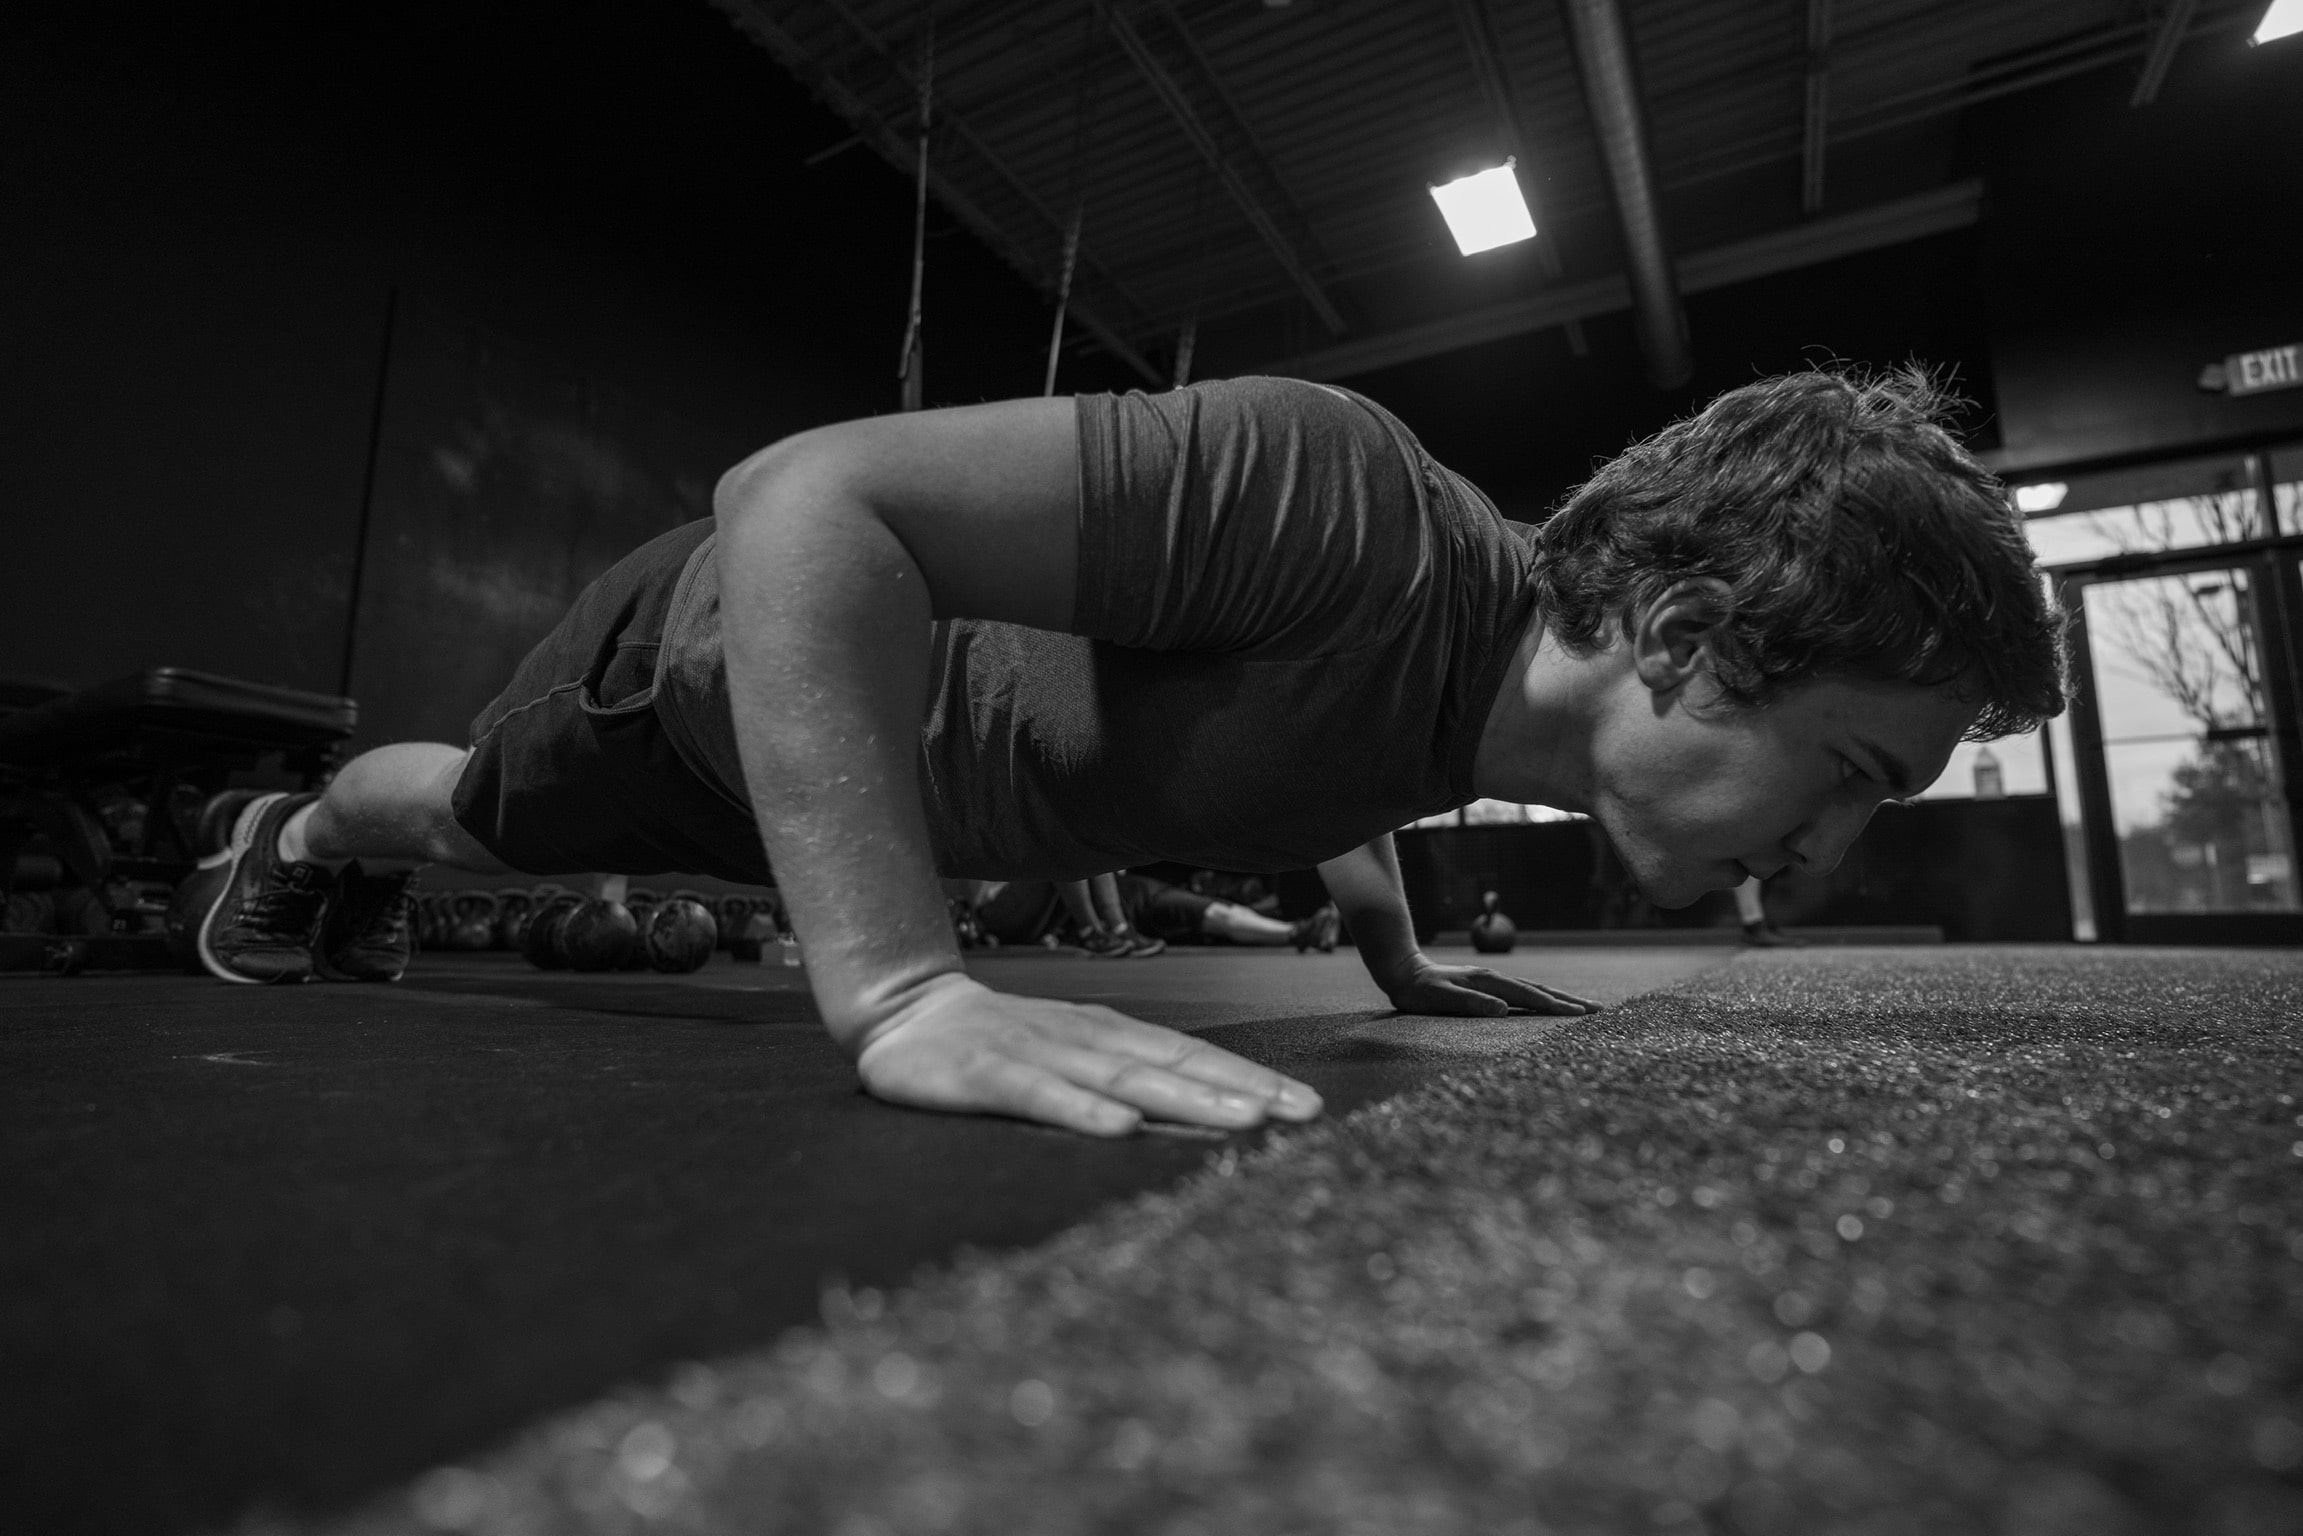 Adam cruhing push-ups at Beyond Strength in Sterling, Virginia